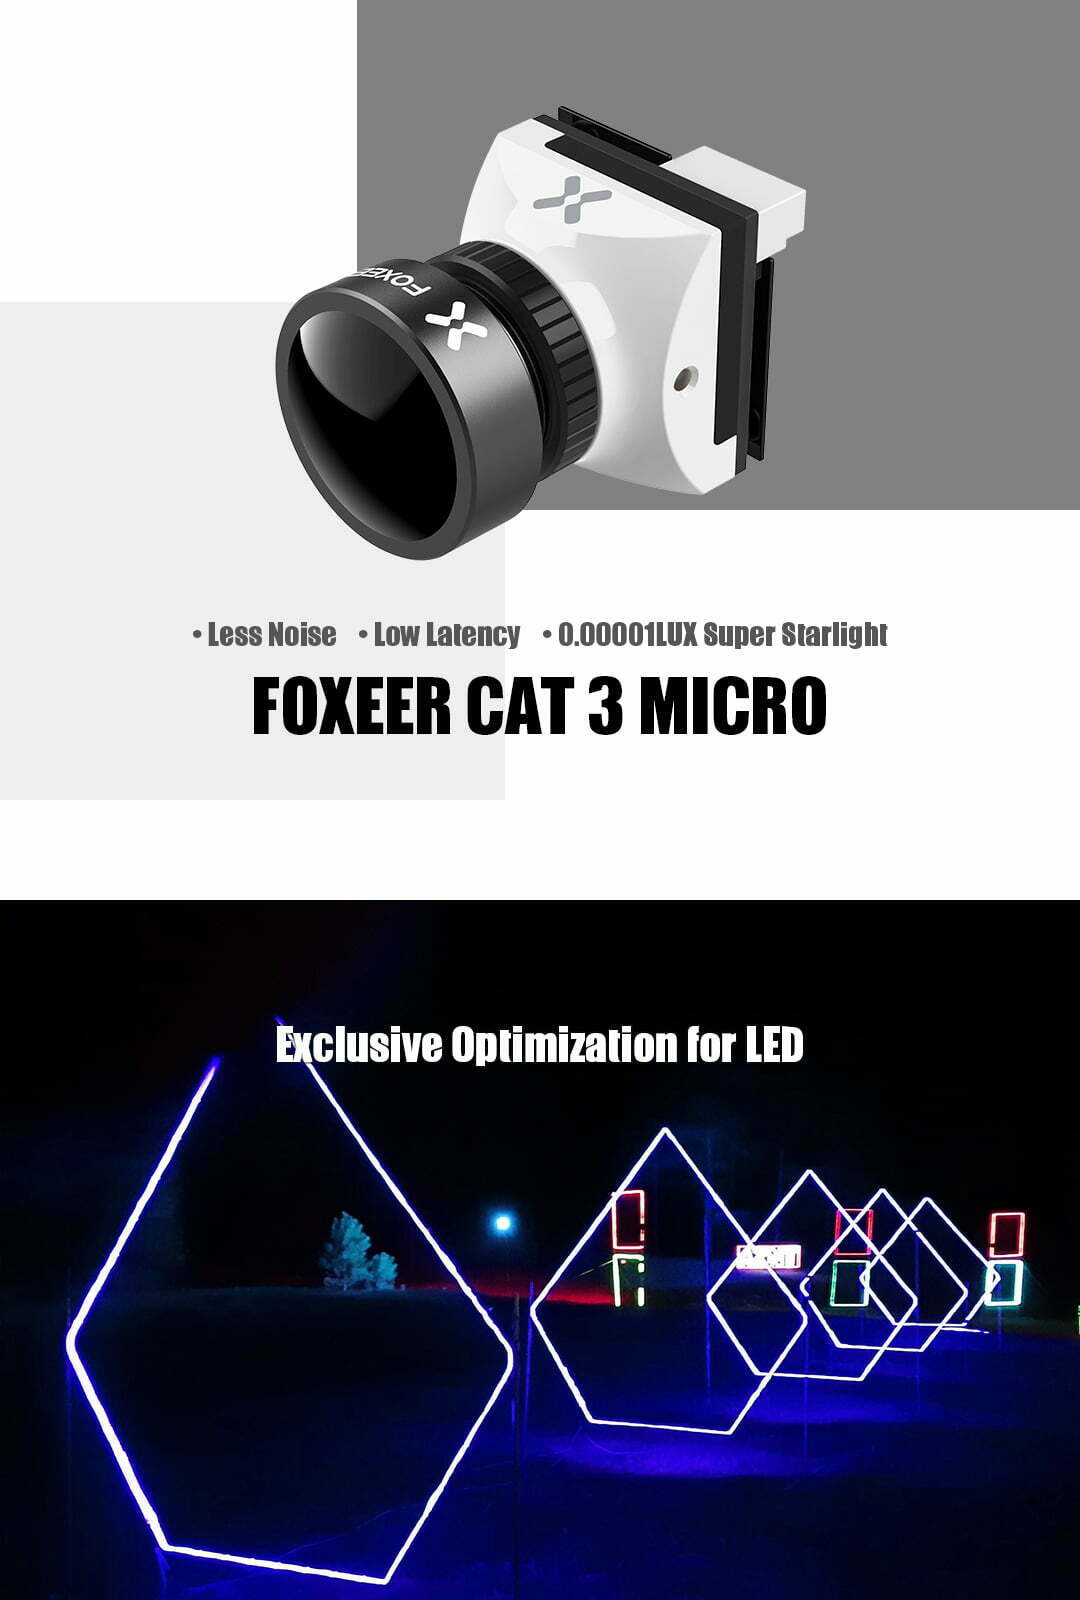 foxeer micro cat 3 1200tvl 0 00001lux super low light night camera mantisfpv description 01